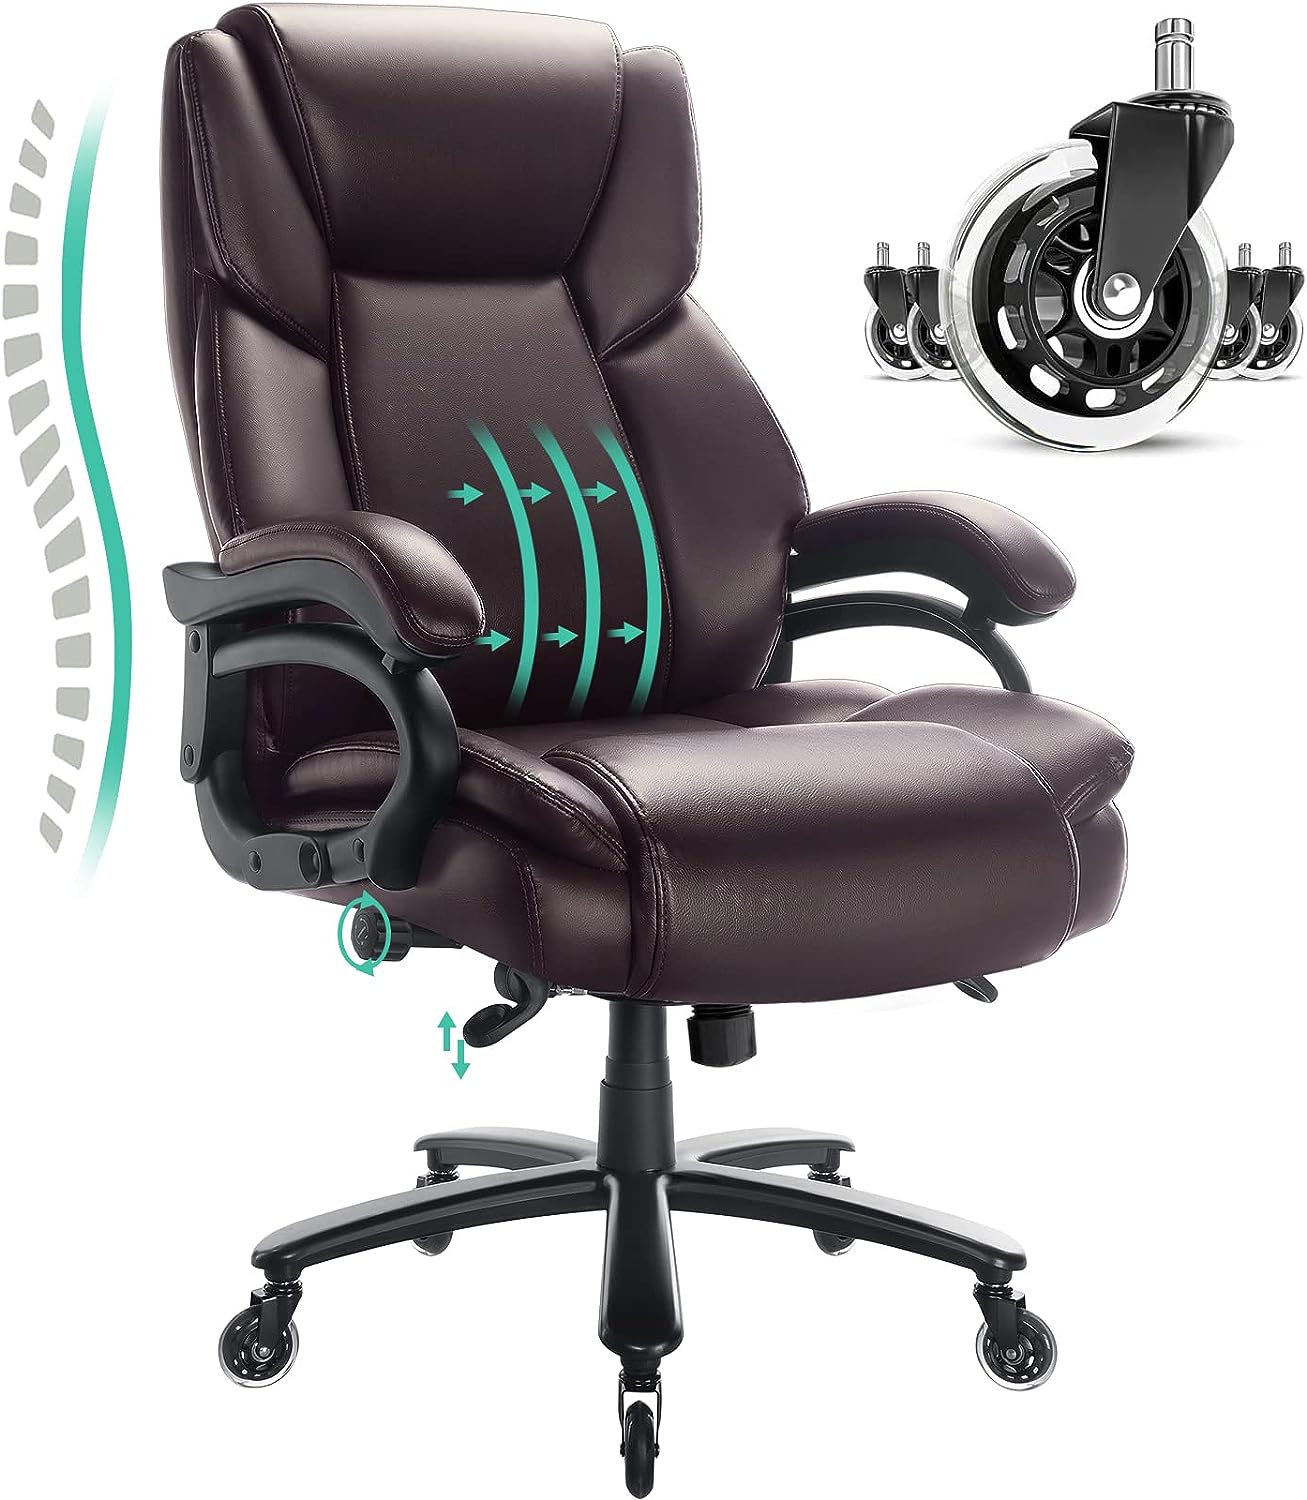 Silla de oficina grande y alta de 500 libras, silla de escritorio ejecutiva  ergonómica, silla giratoria con brazos ajustables, respaldo de malla